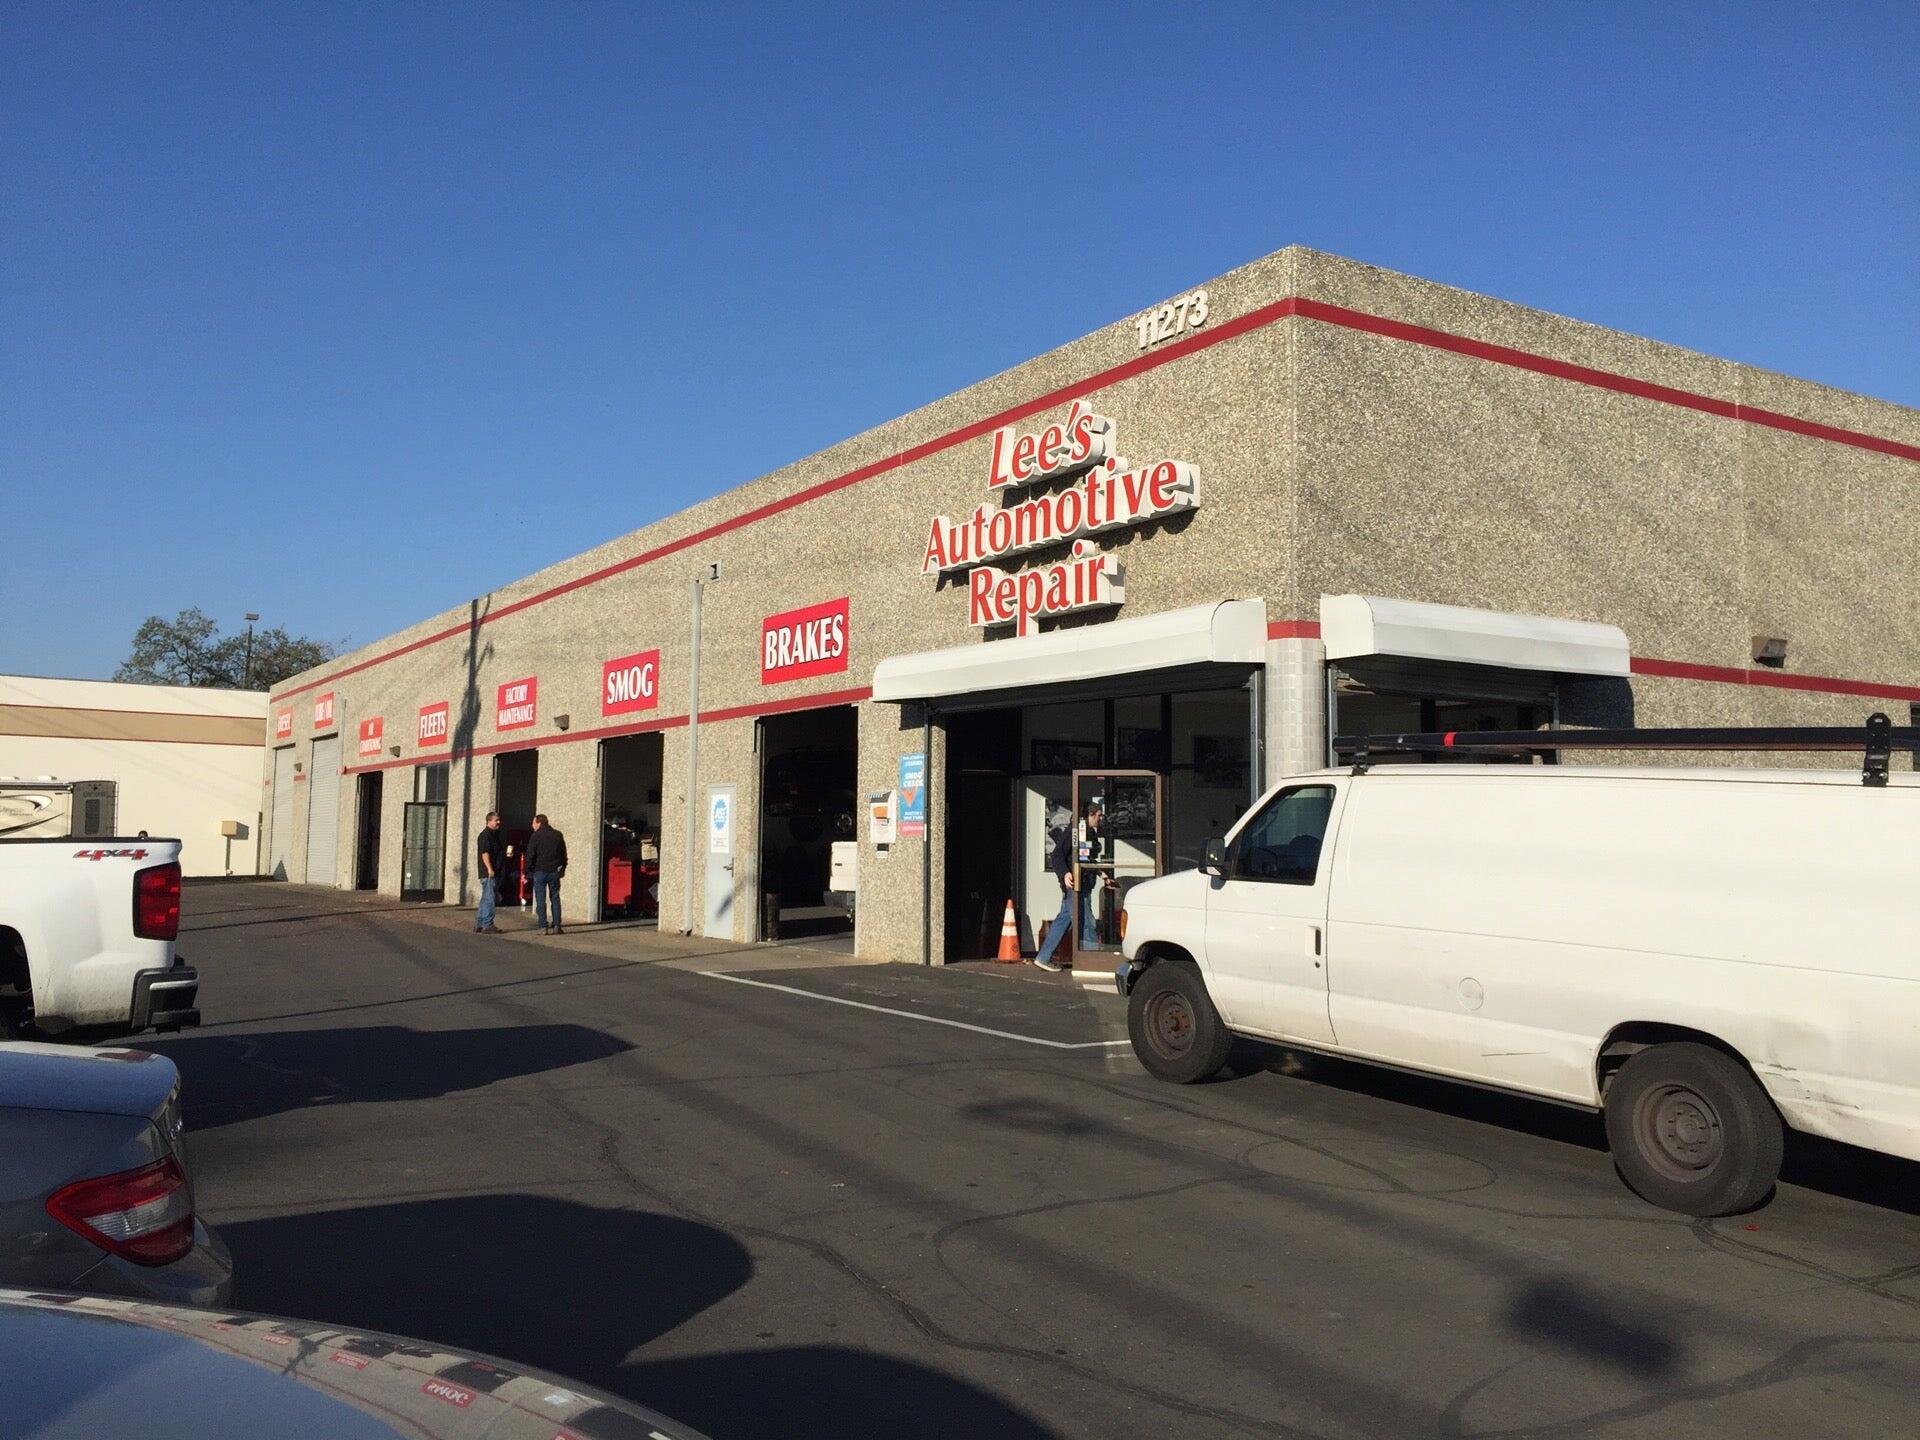 Lee's Automotive Repair - Rancho Cordova, CA - Nextdoor